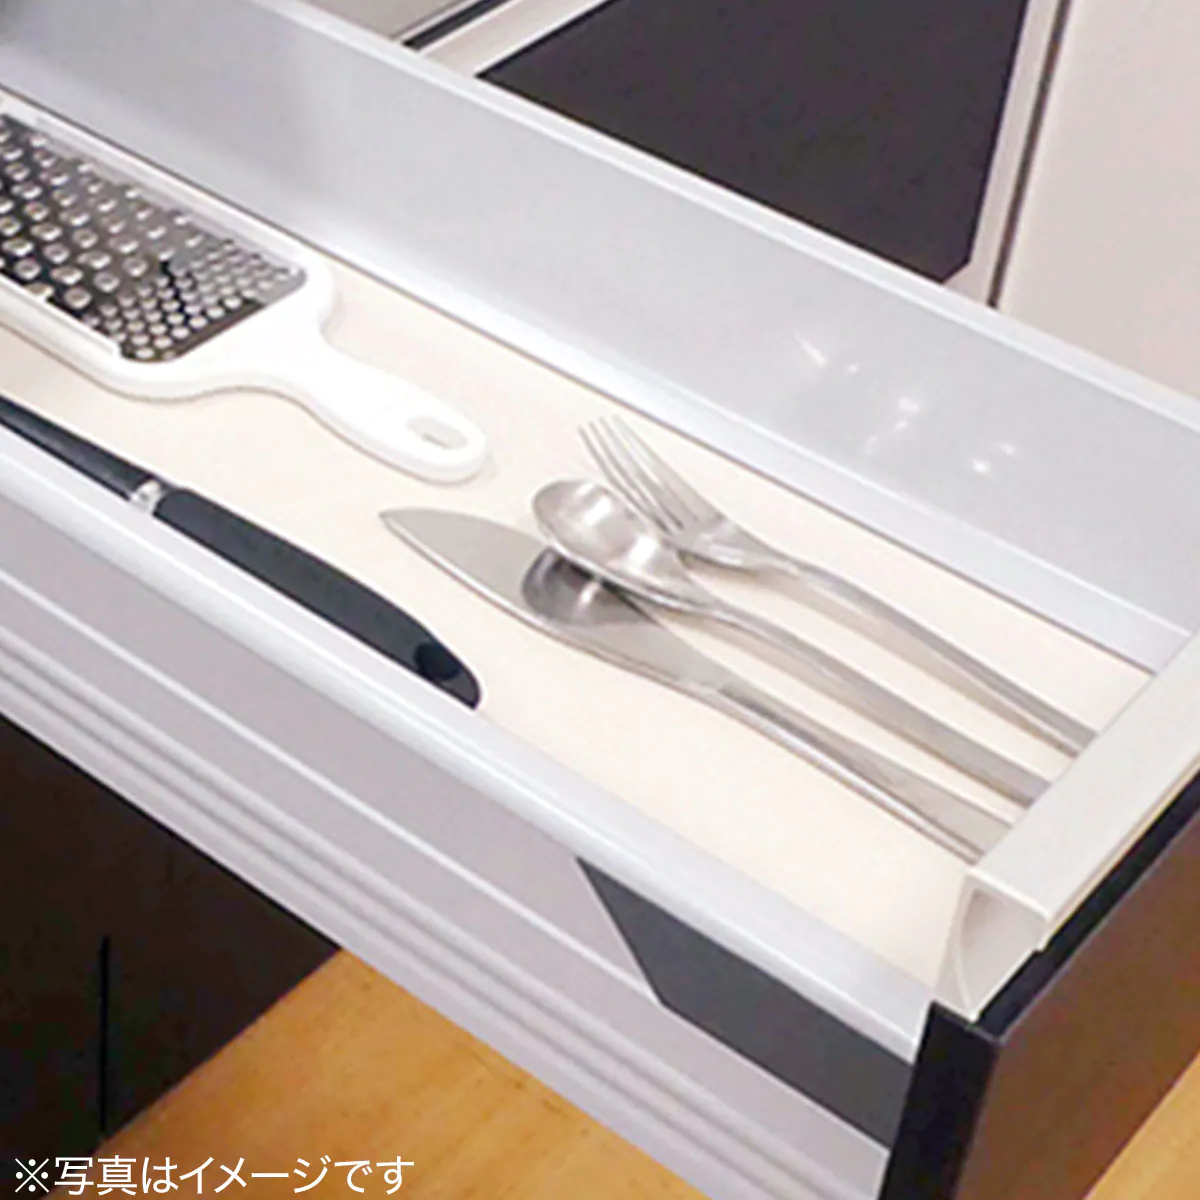 NITORI(ニトリ) システムキッチン用防虫シートの商品画像サムネ3 